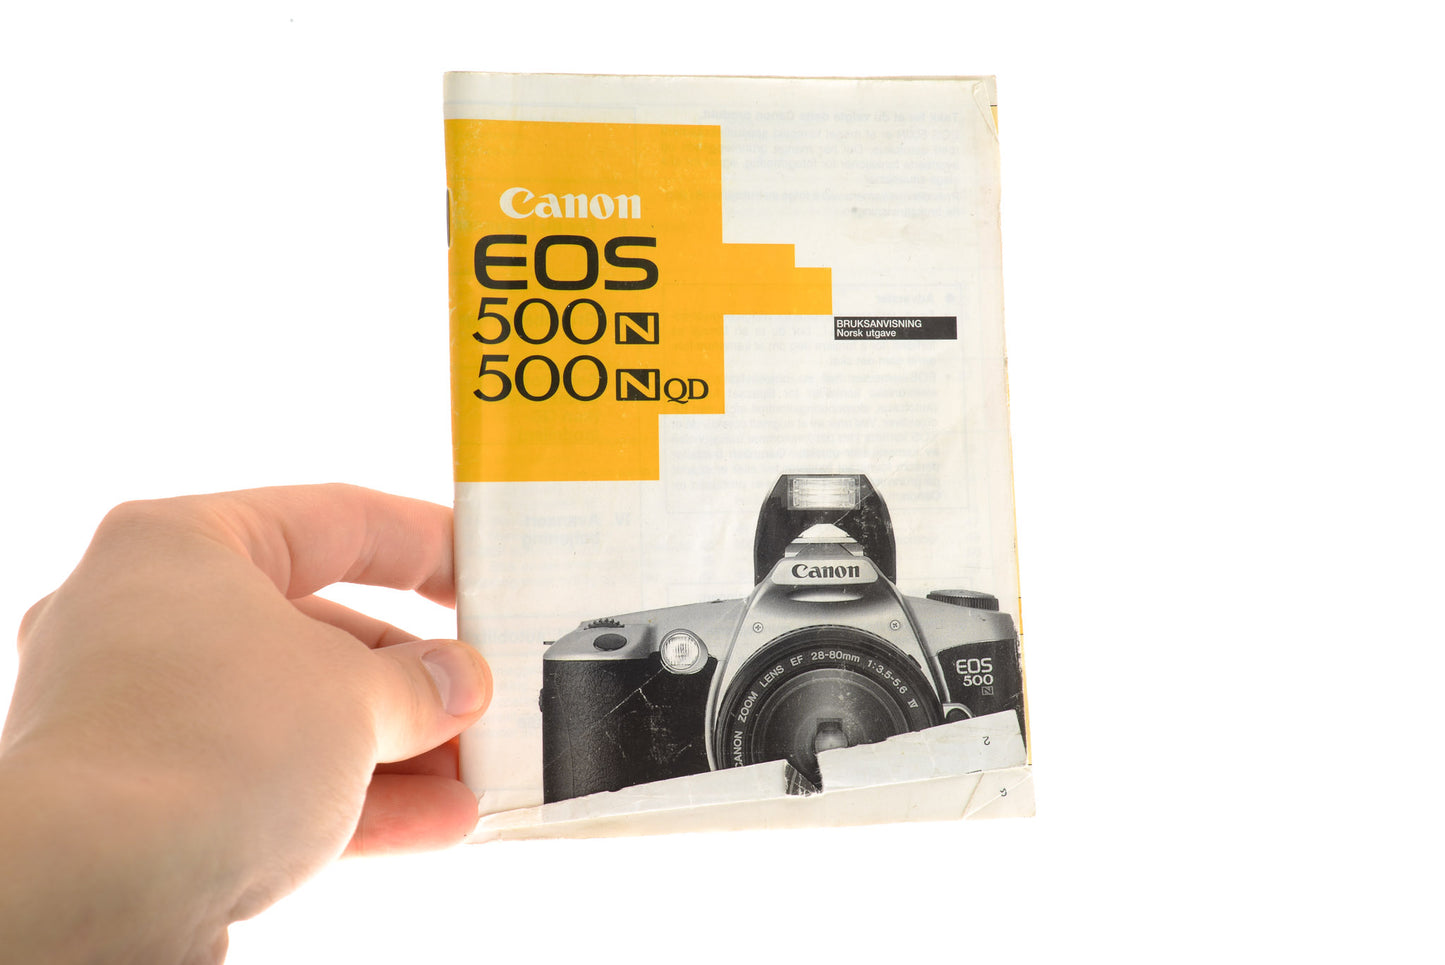 Canon EOS 500 N / 500 N QD Instructions